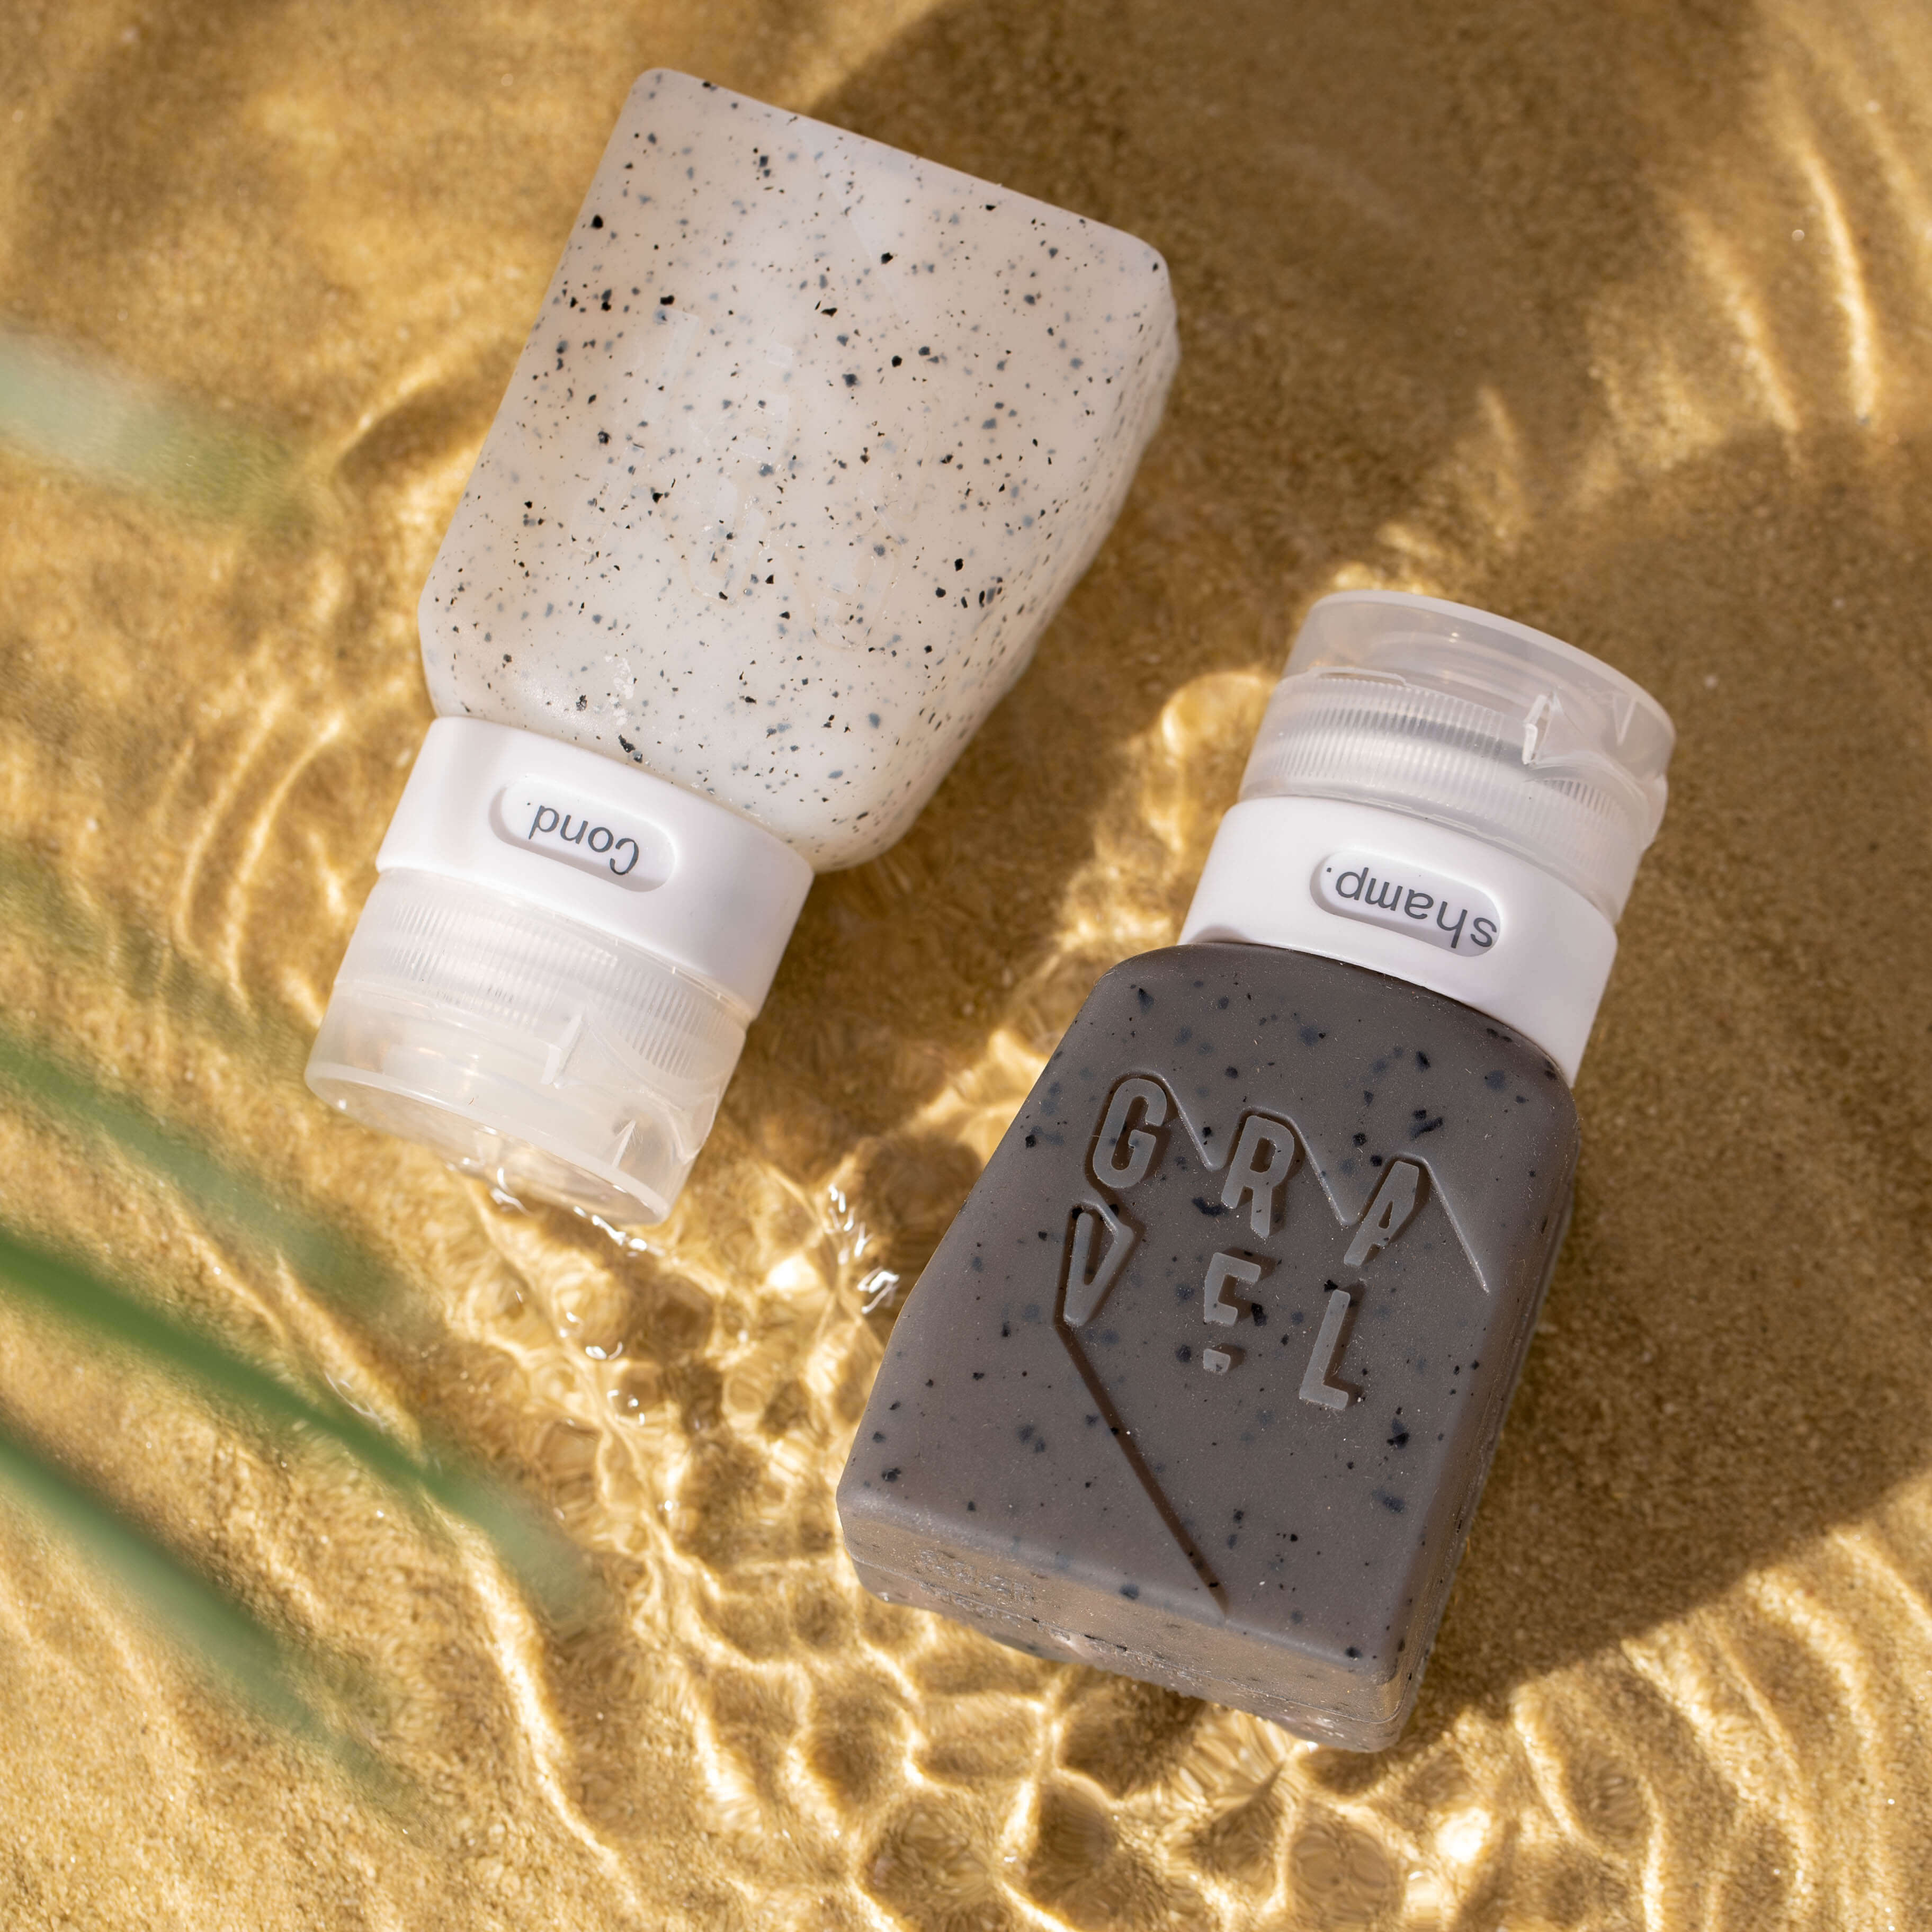 AllerMates Three Pack of Travel Sized Mini Bottles for Liquid